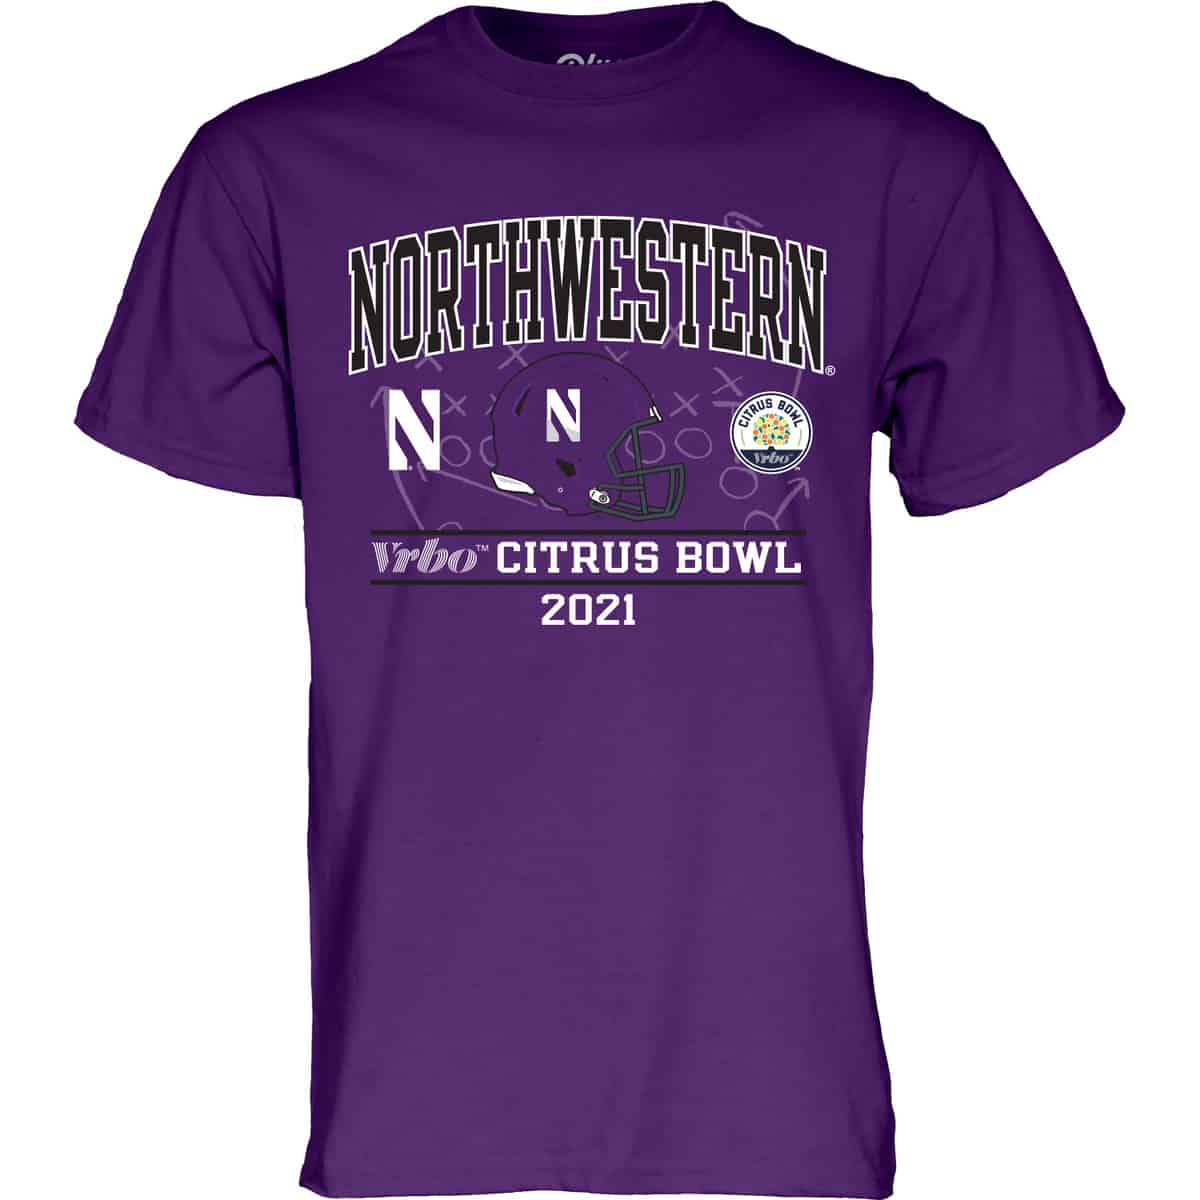 Northwestern University Wildcats Citrus Bowl 2021 Short Sleeve Tee Shirt